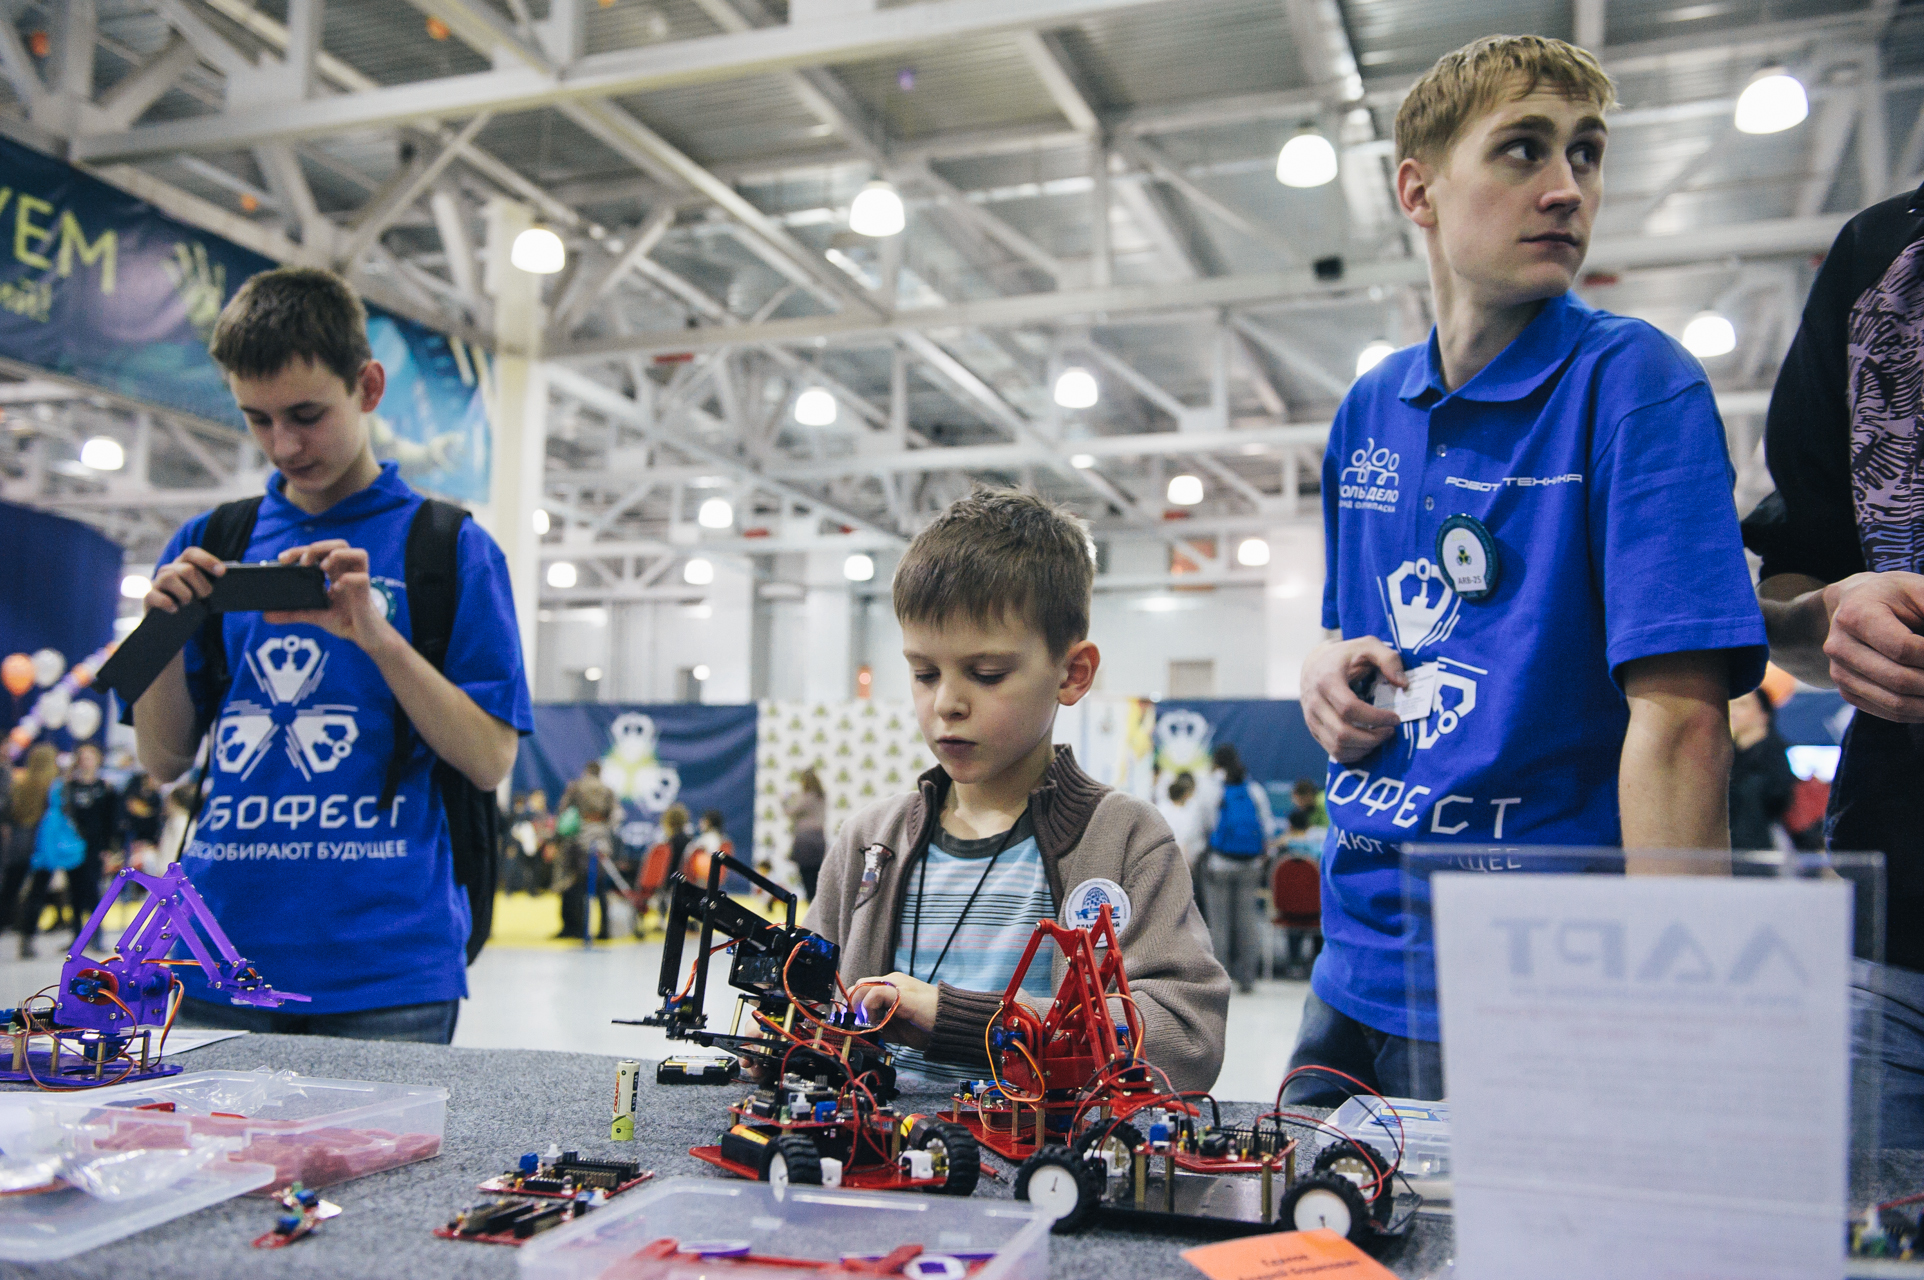 Moscow schoolchildren sweep RoboFest competition